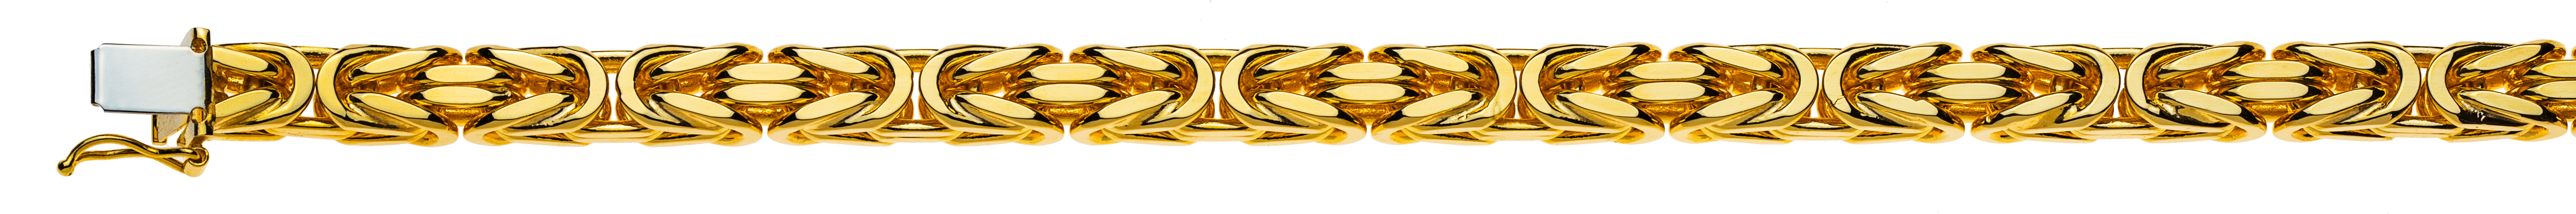 AURONOS Prestige Necklace yellow gold 18K king chain 60cm 6mm